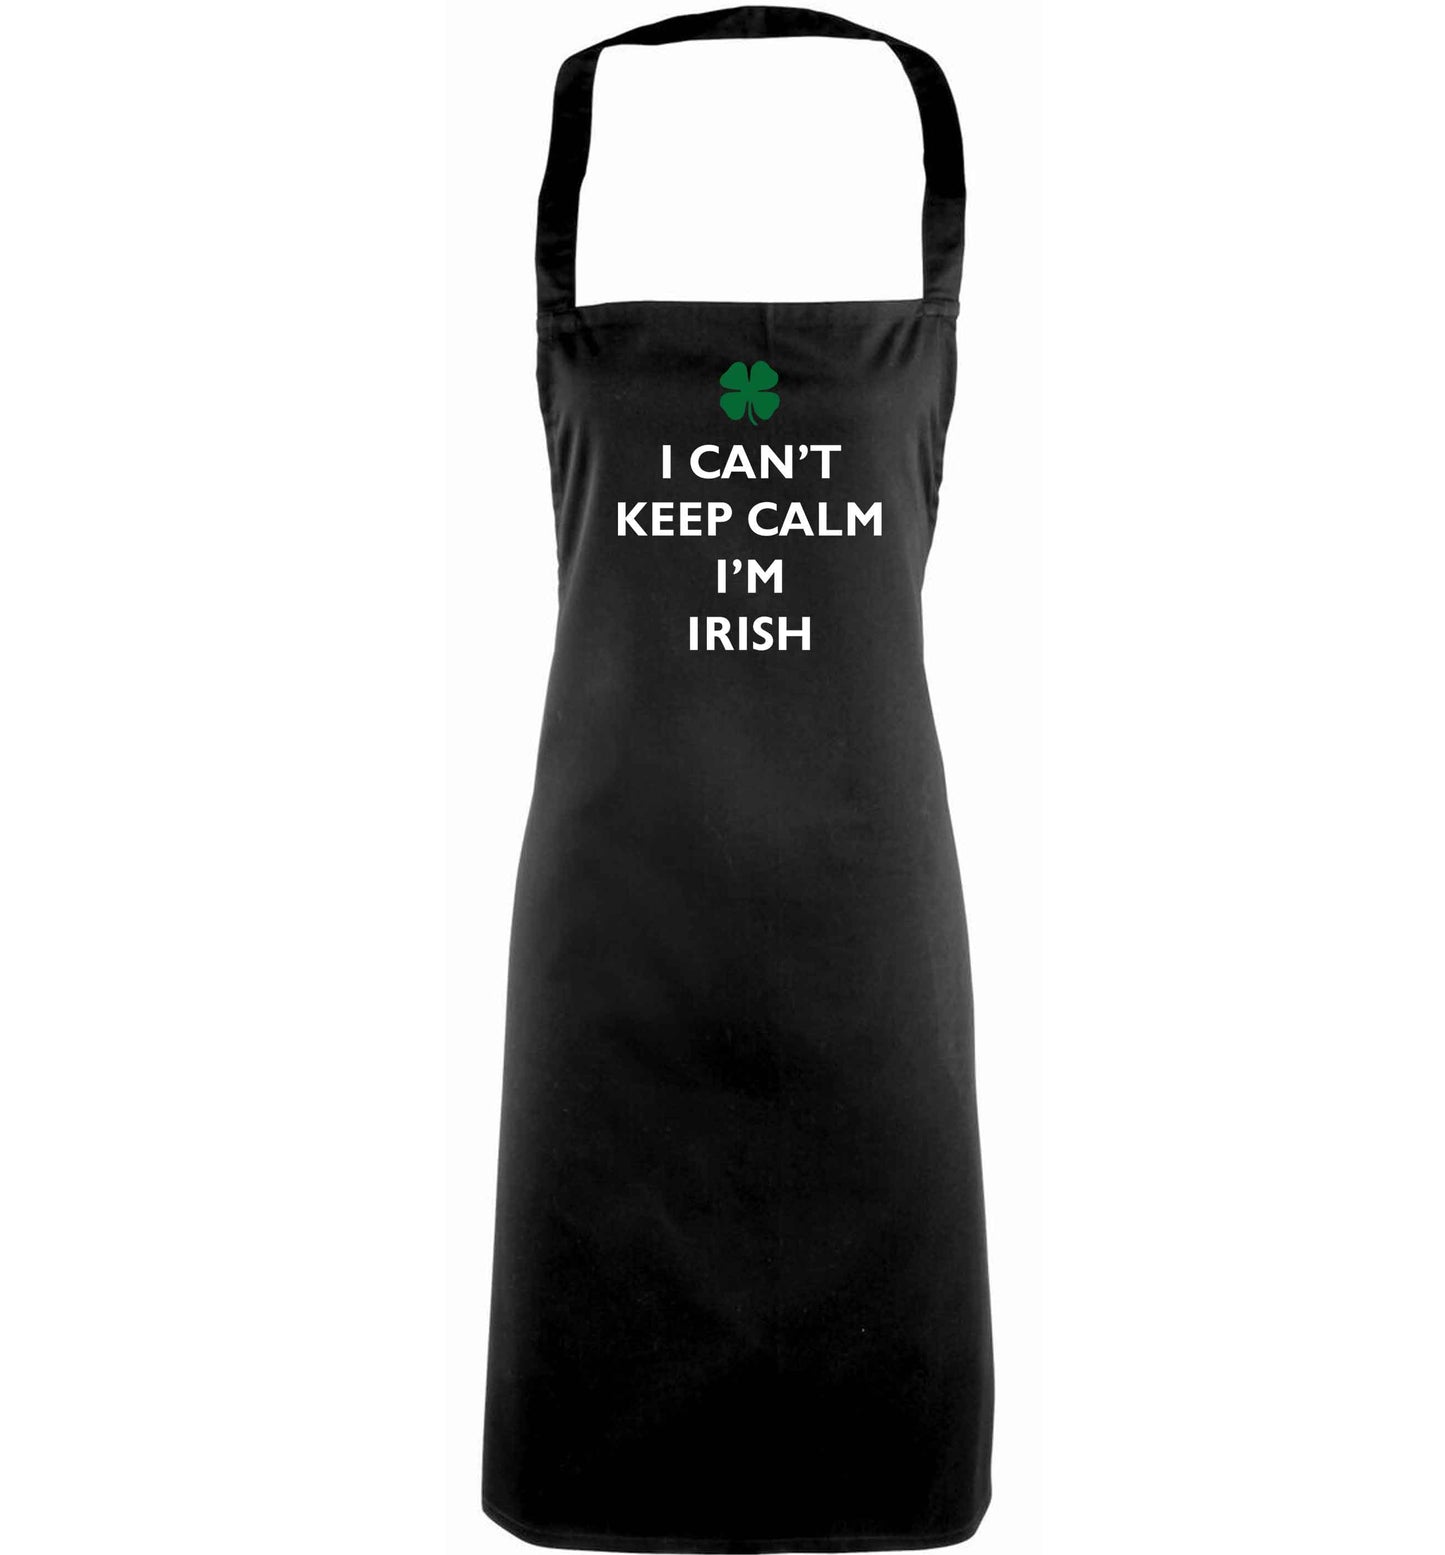 I can't keep calm I'm Irish adults black apron